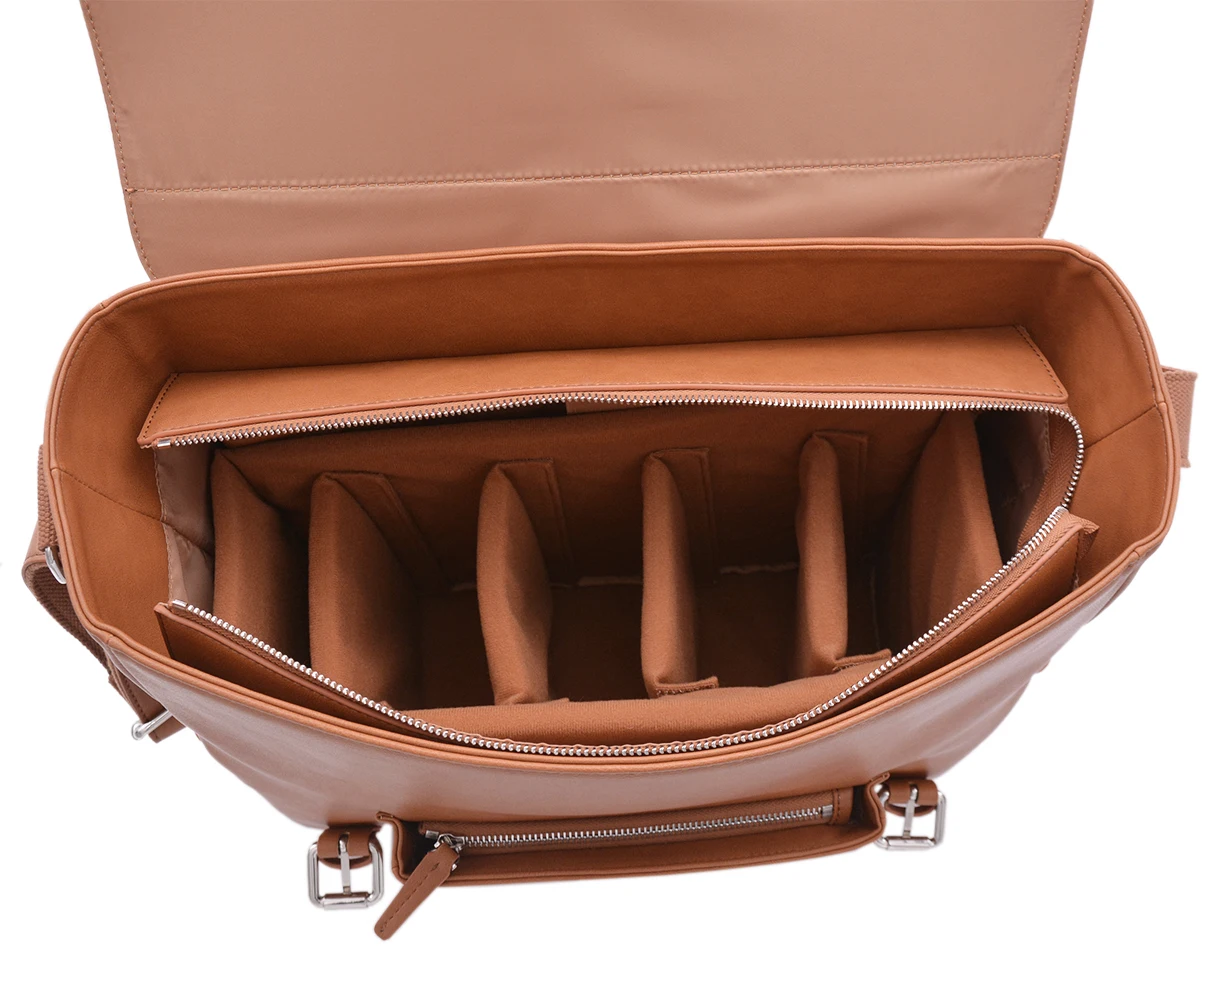 
Waterproof Leather Cross-body Bag Vintage Outdoor Travel Camera Bag 